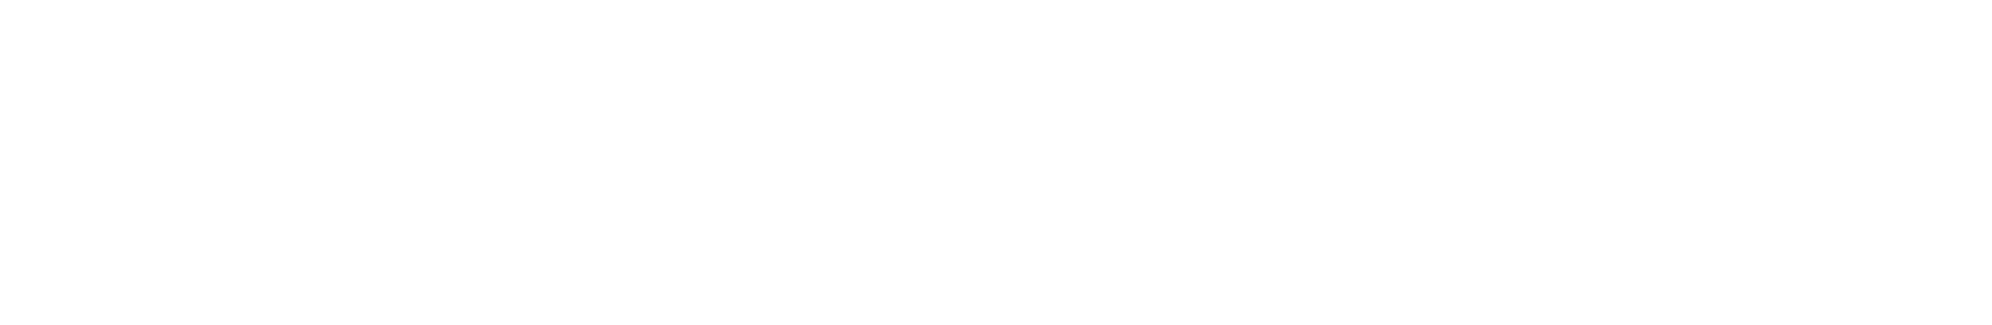 Slate 901 logo, white